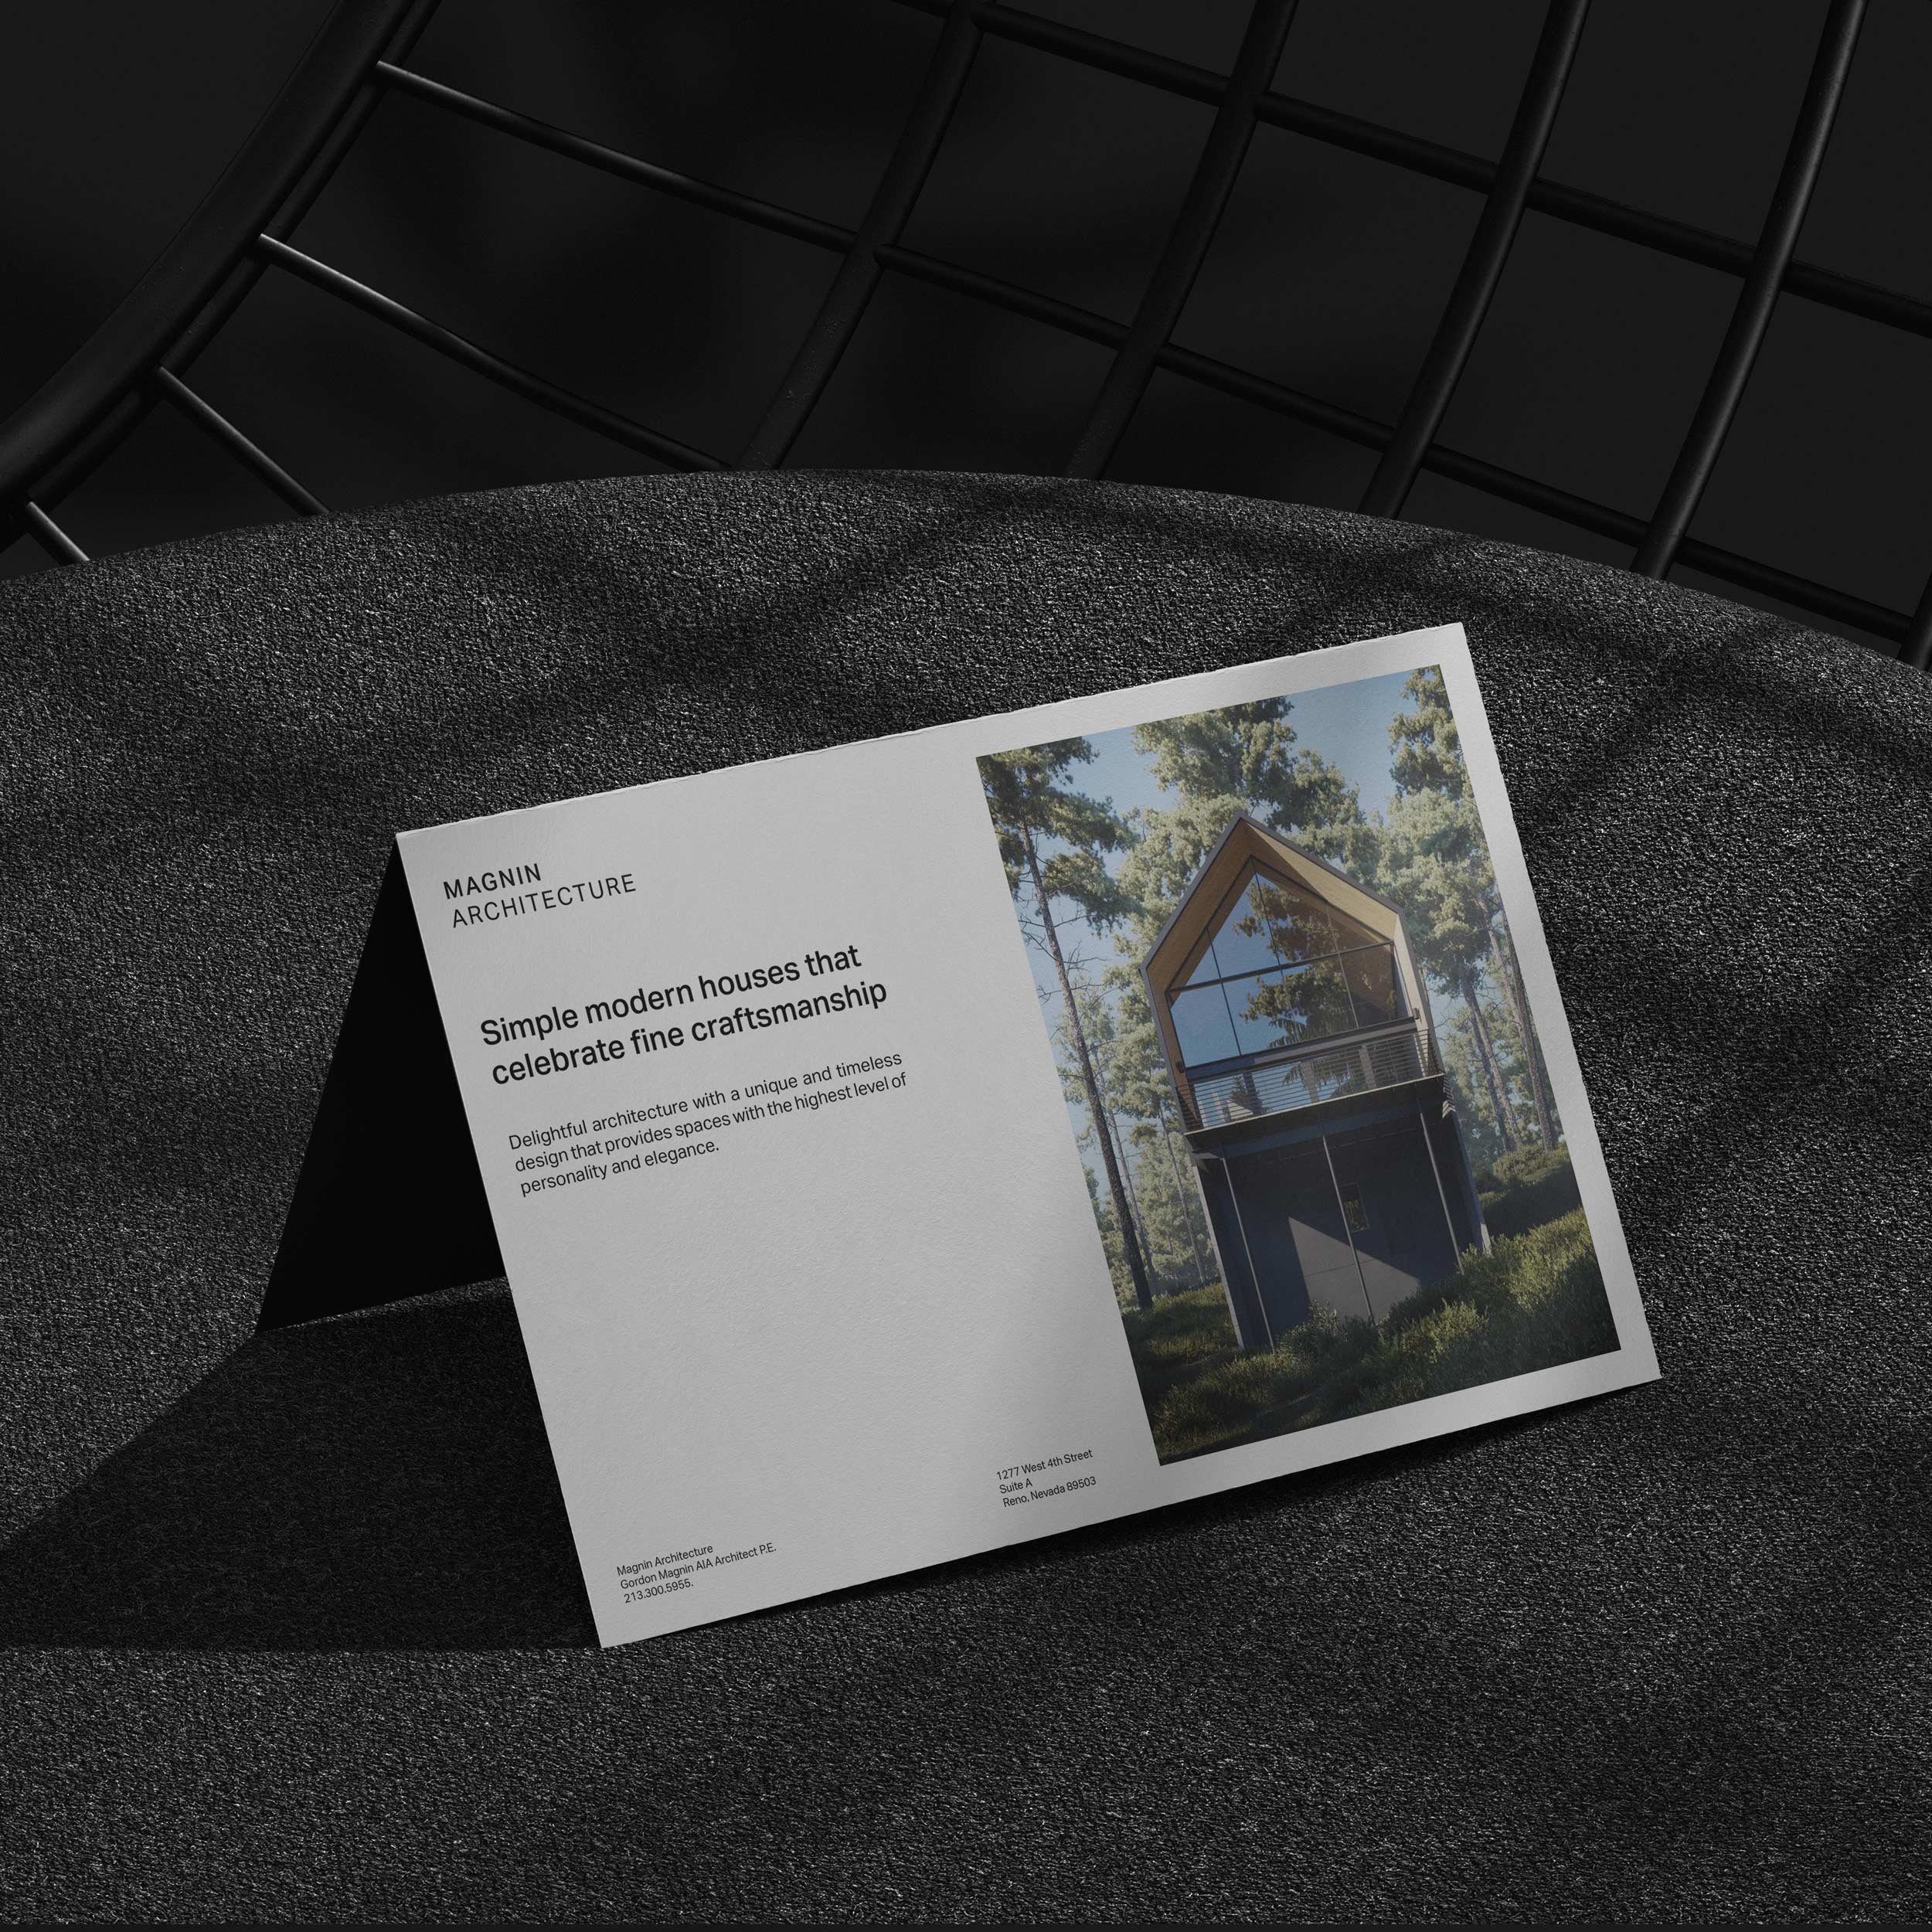 behagen-Branding-and-Marketing-for-Real-Estate-Magnin-Architecture-Cover.jpg